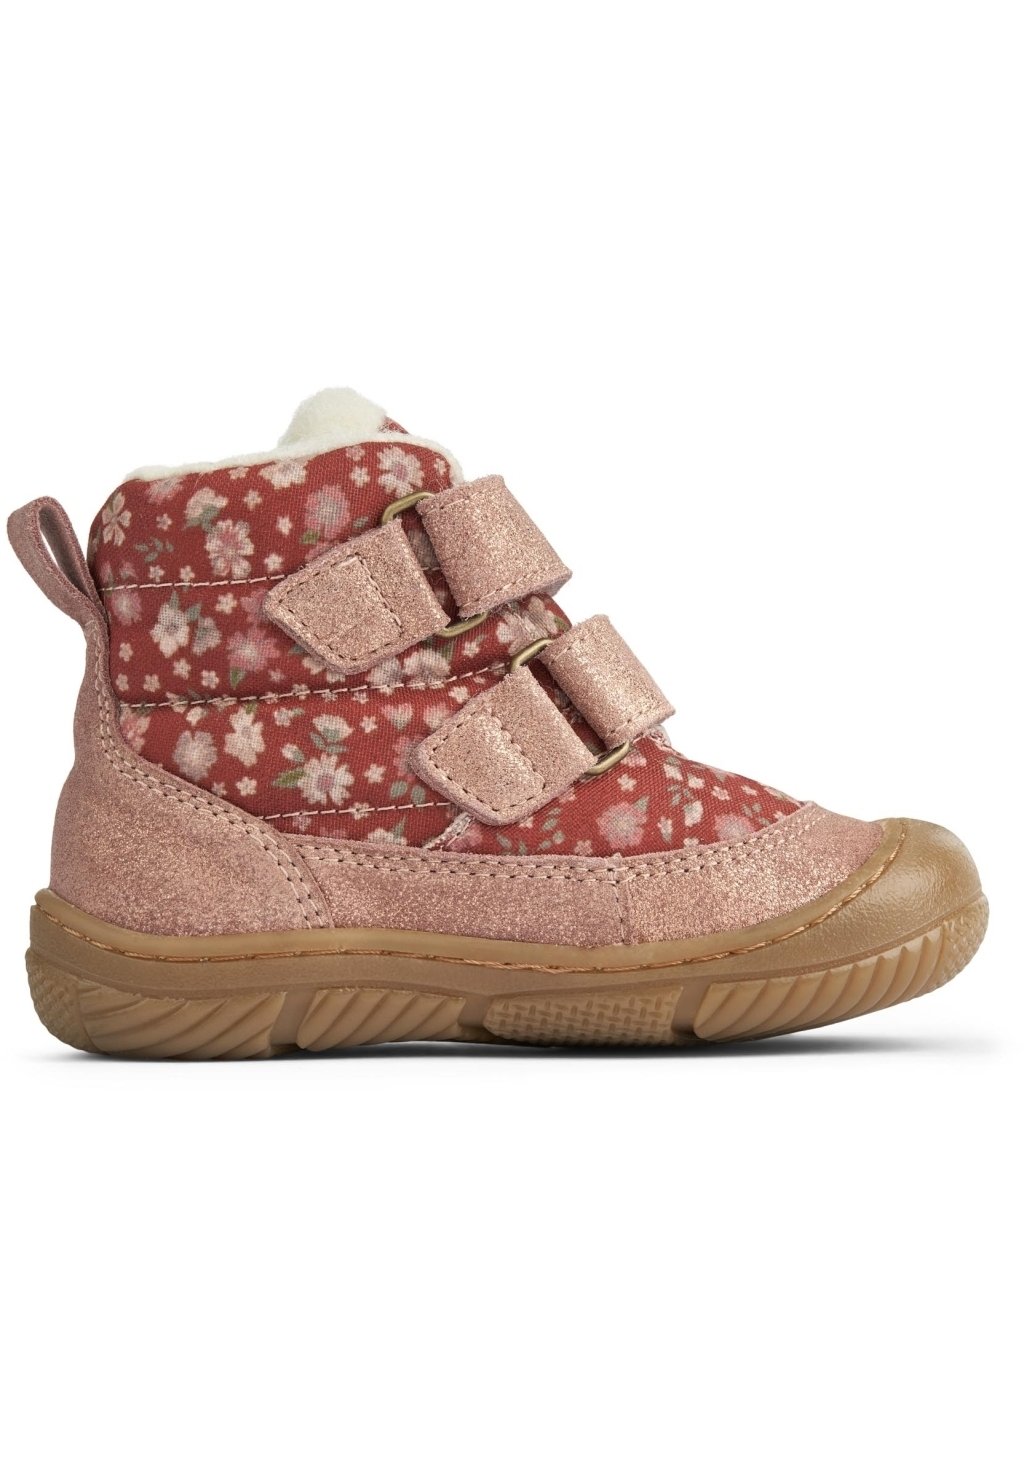 Зимние сапоги/зимние ботинки DOWI Wheat, цвет red flowers